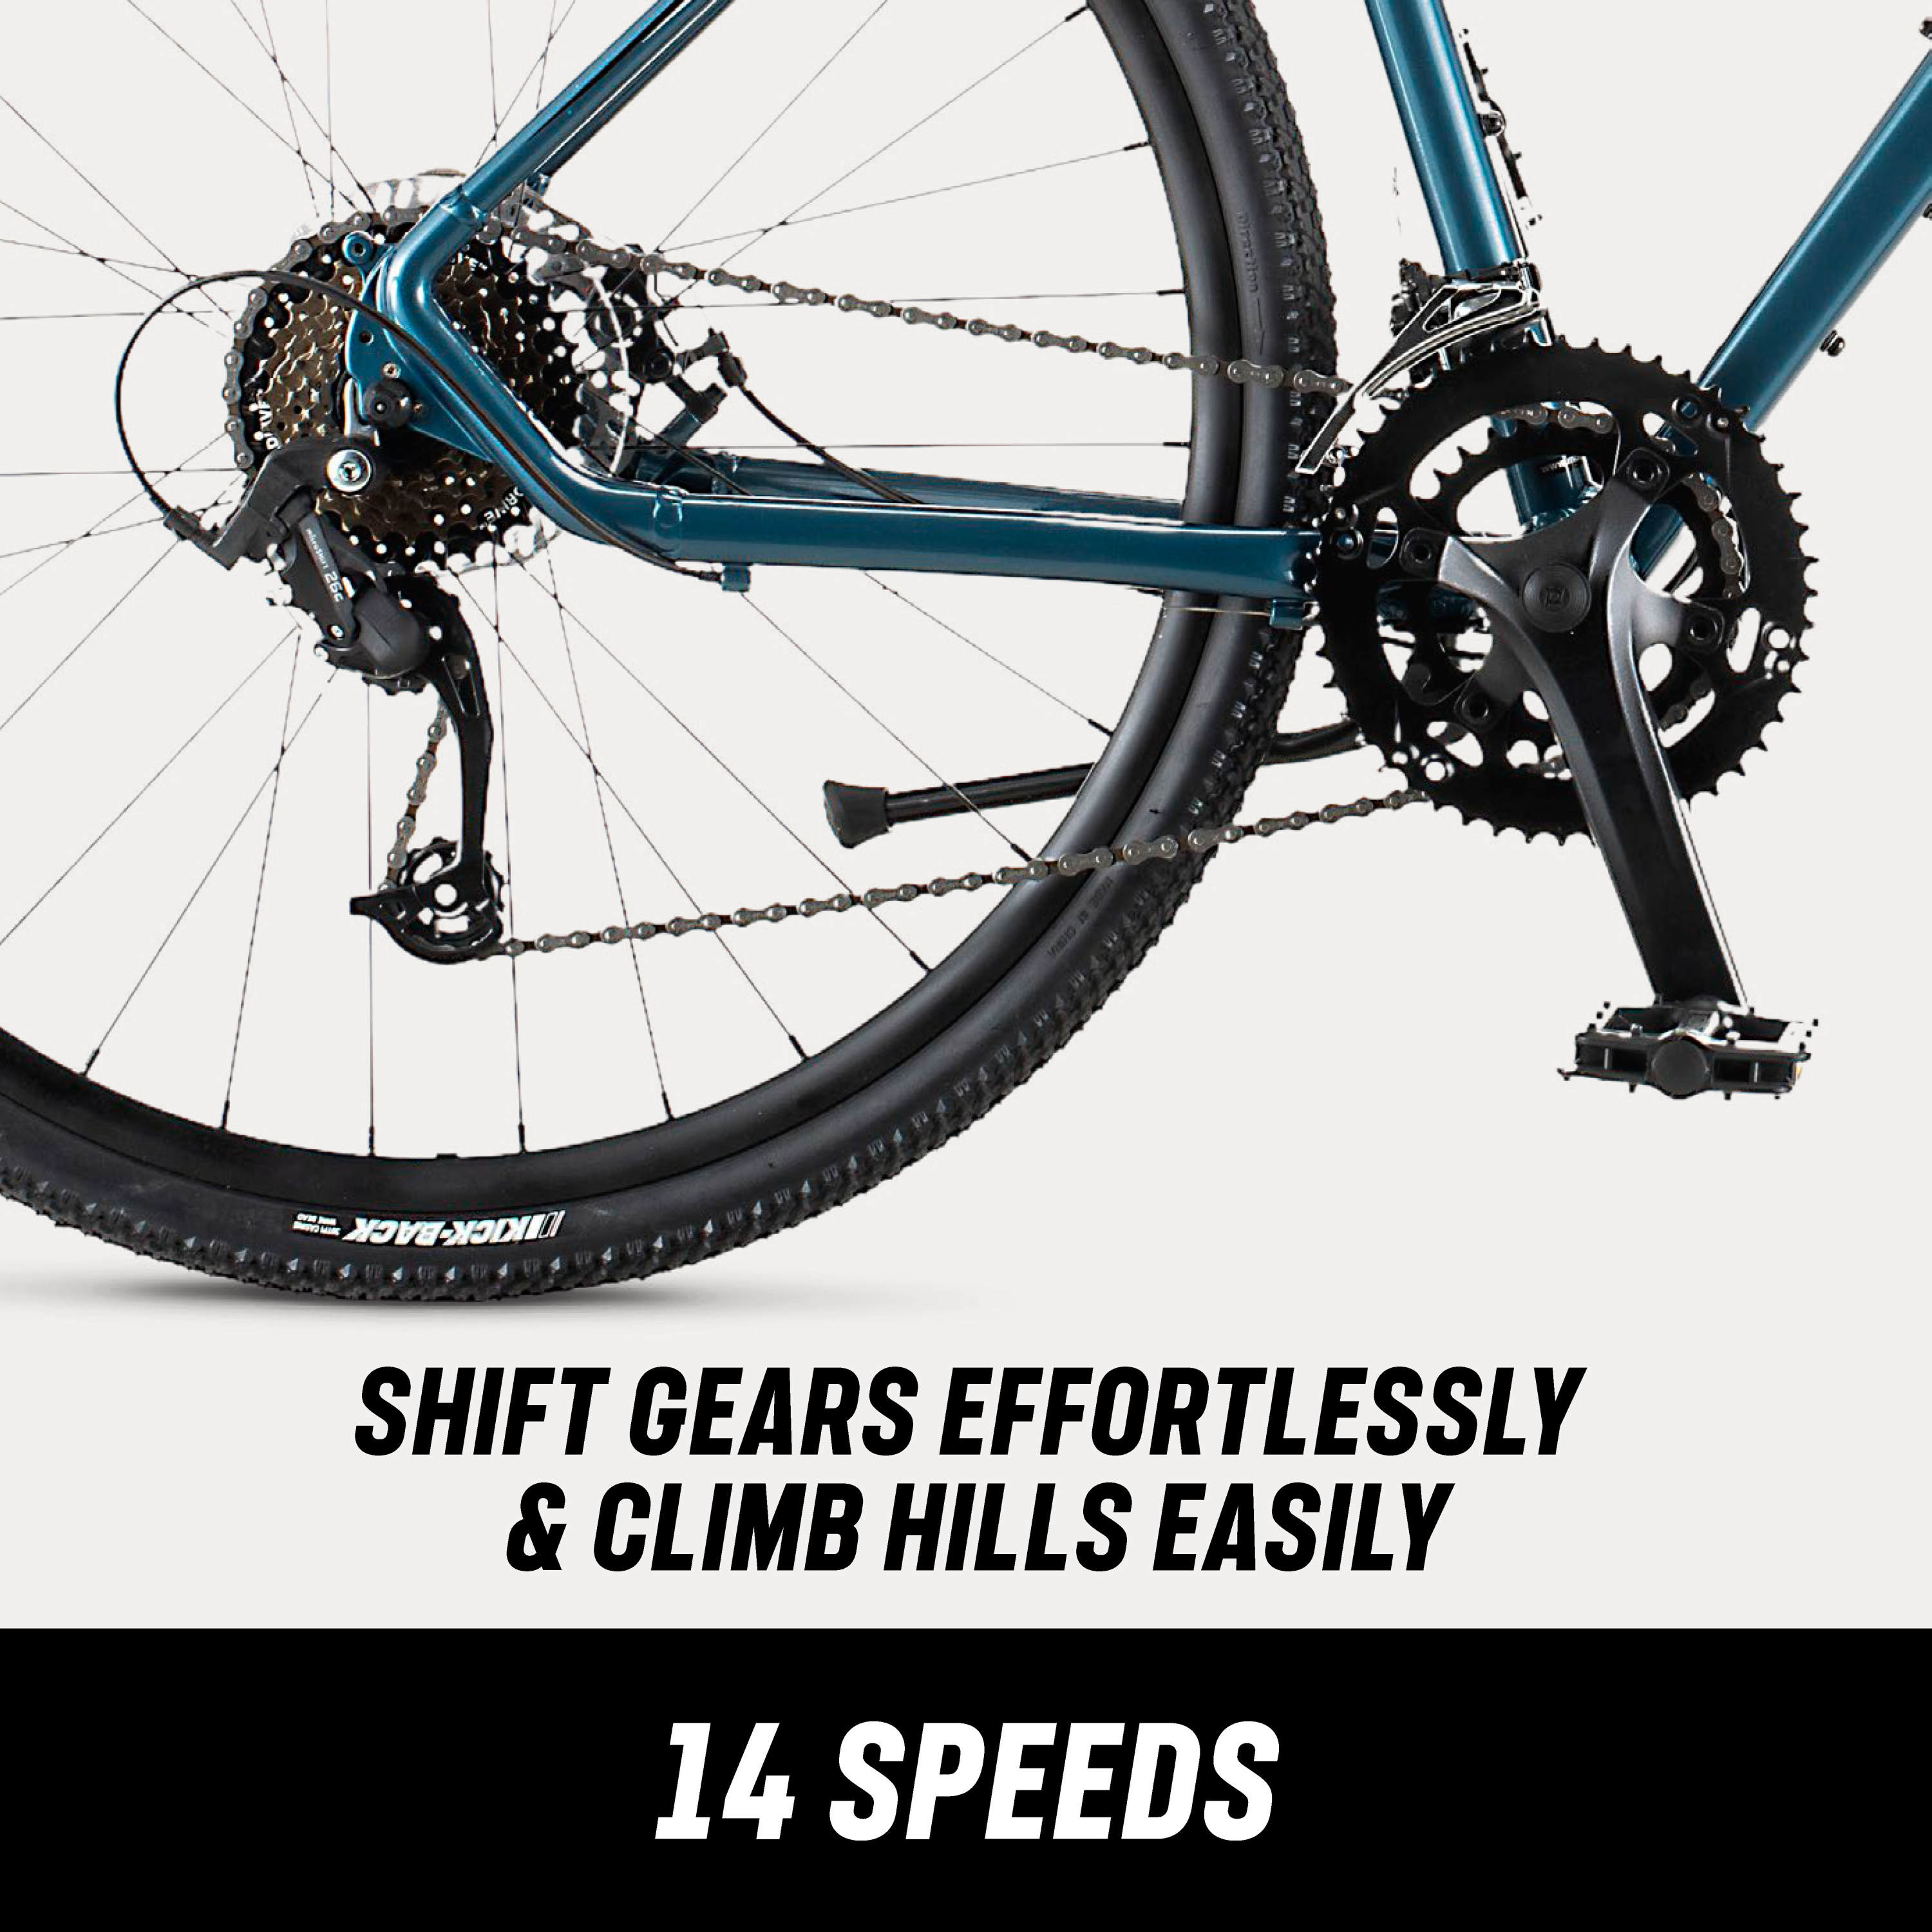 Mongoose Grit Adventure Road Bike, 14 Speeds, 700c Wheels, Blue, Ages 14+ - image 5 of 8